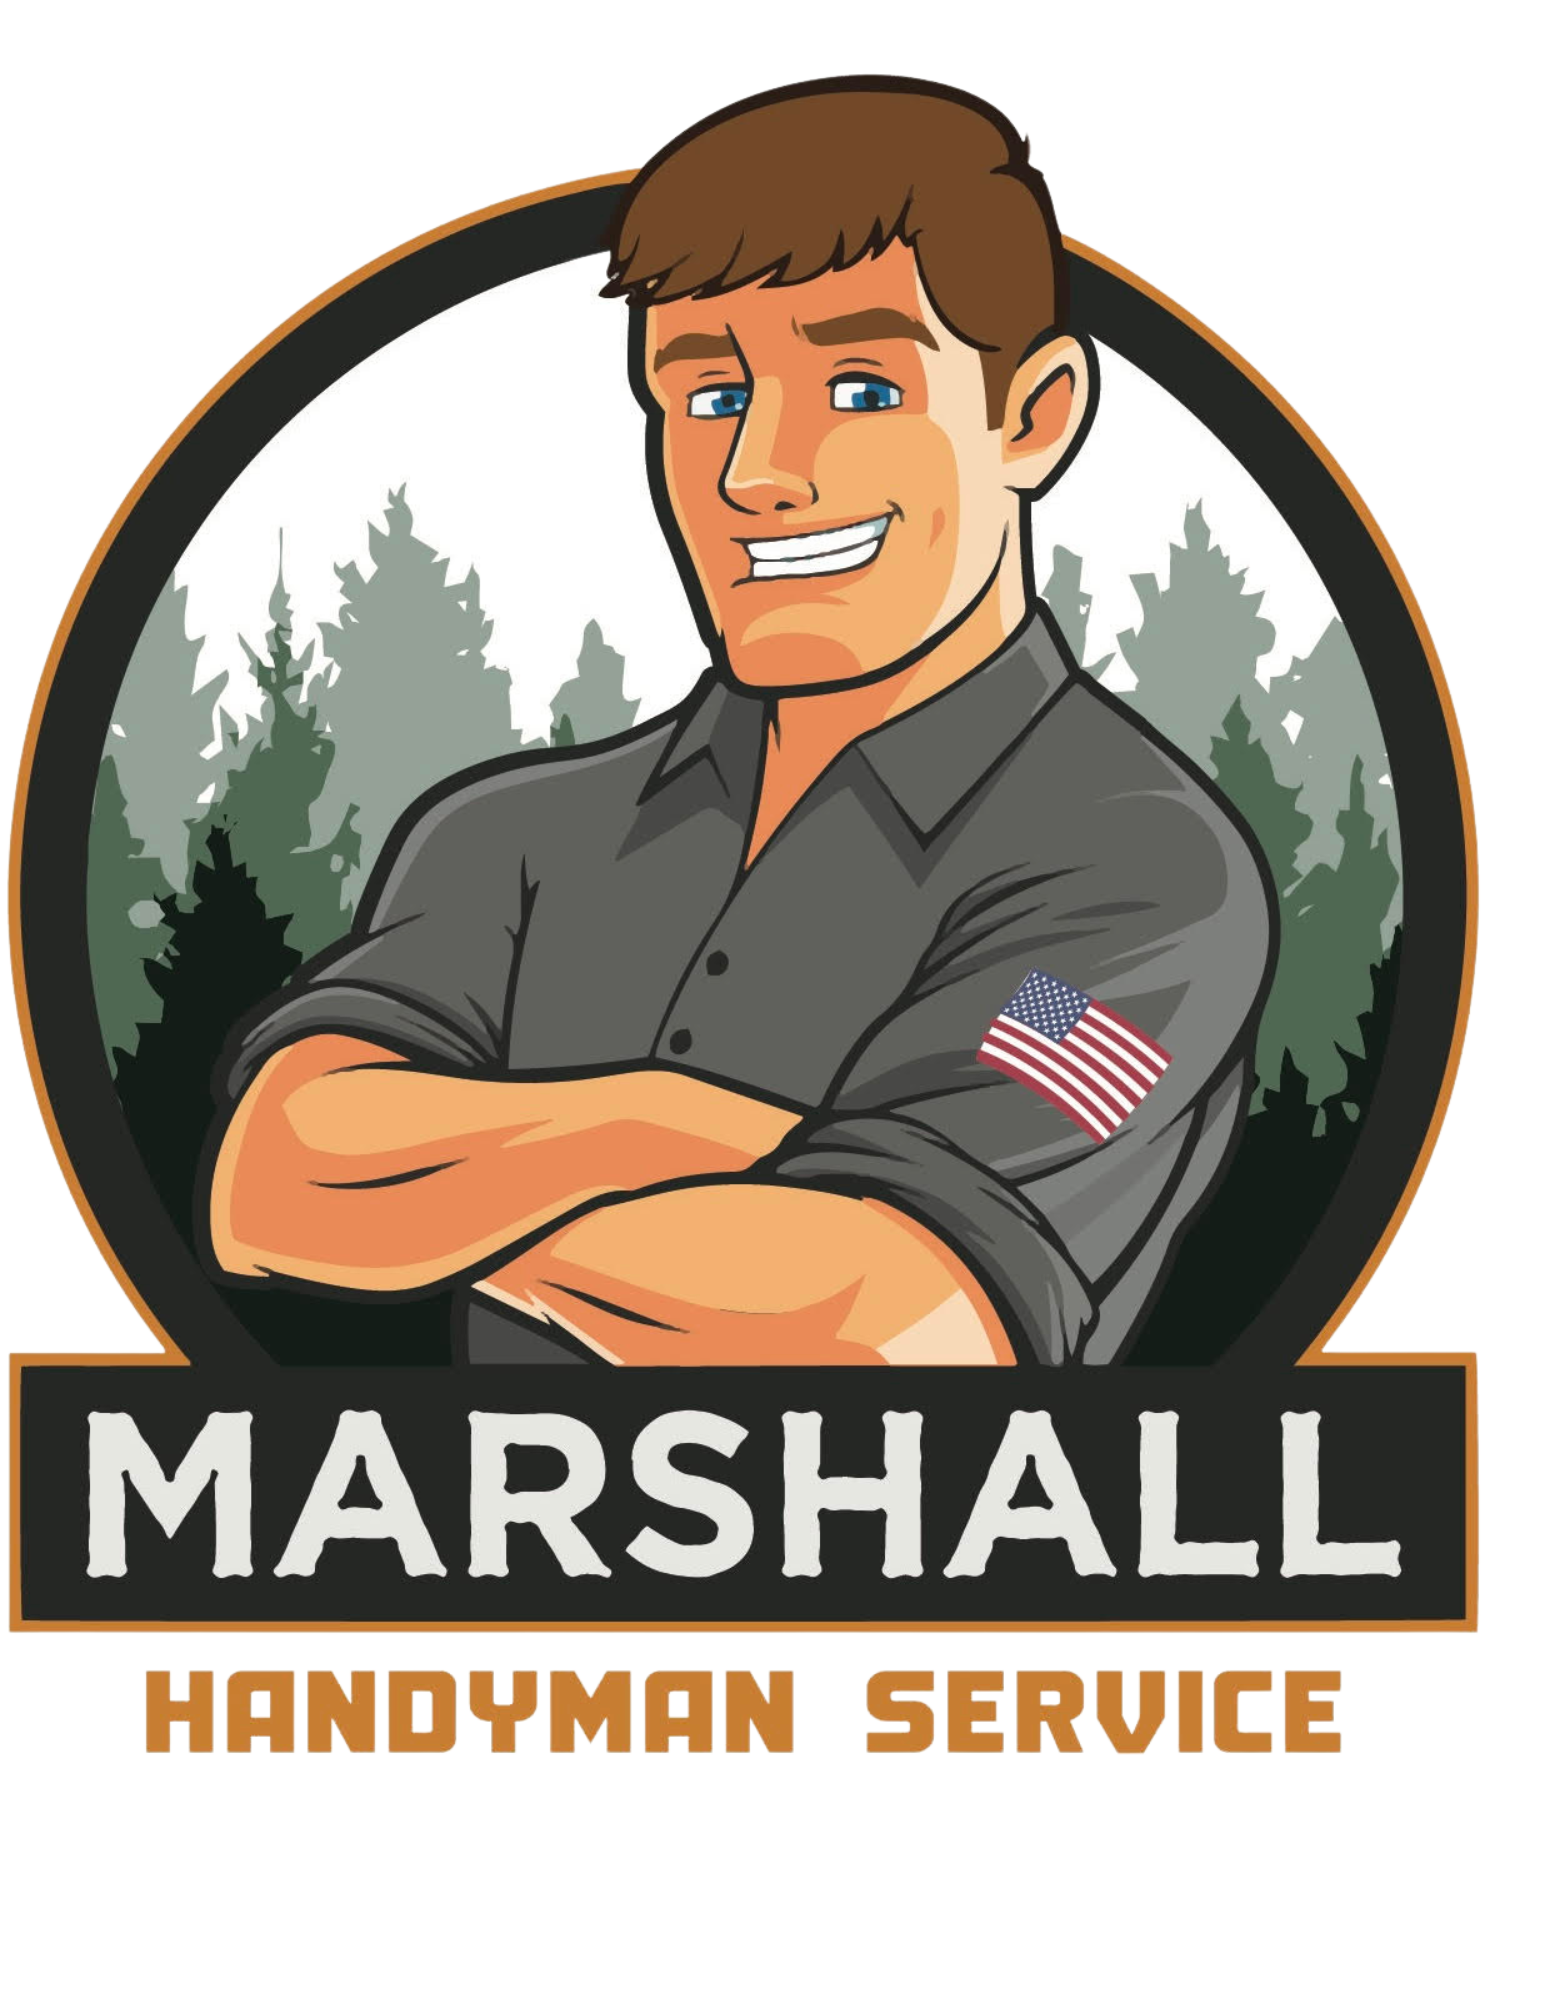 Marshall Handyman Service